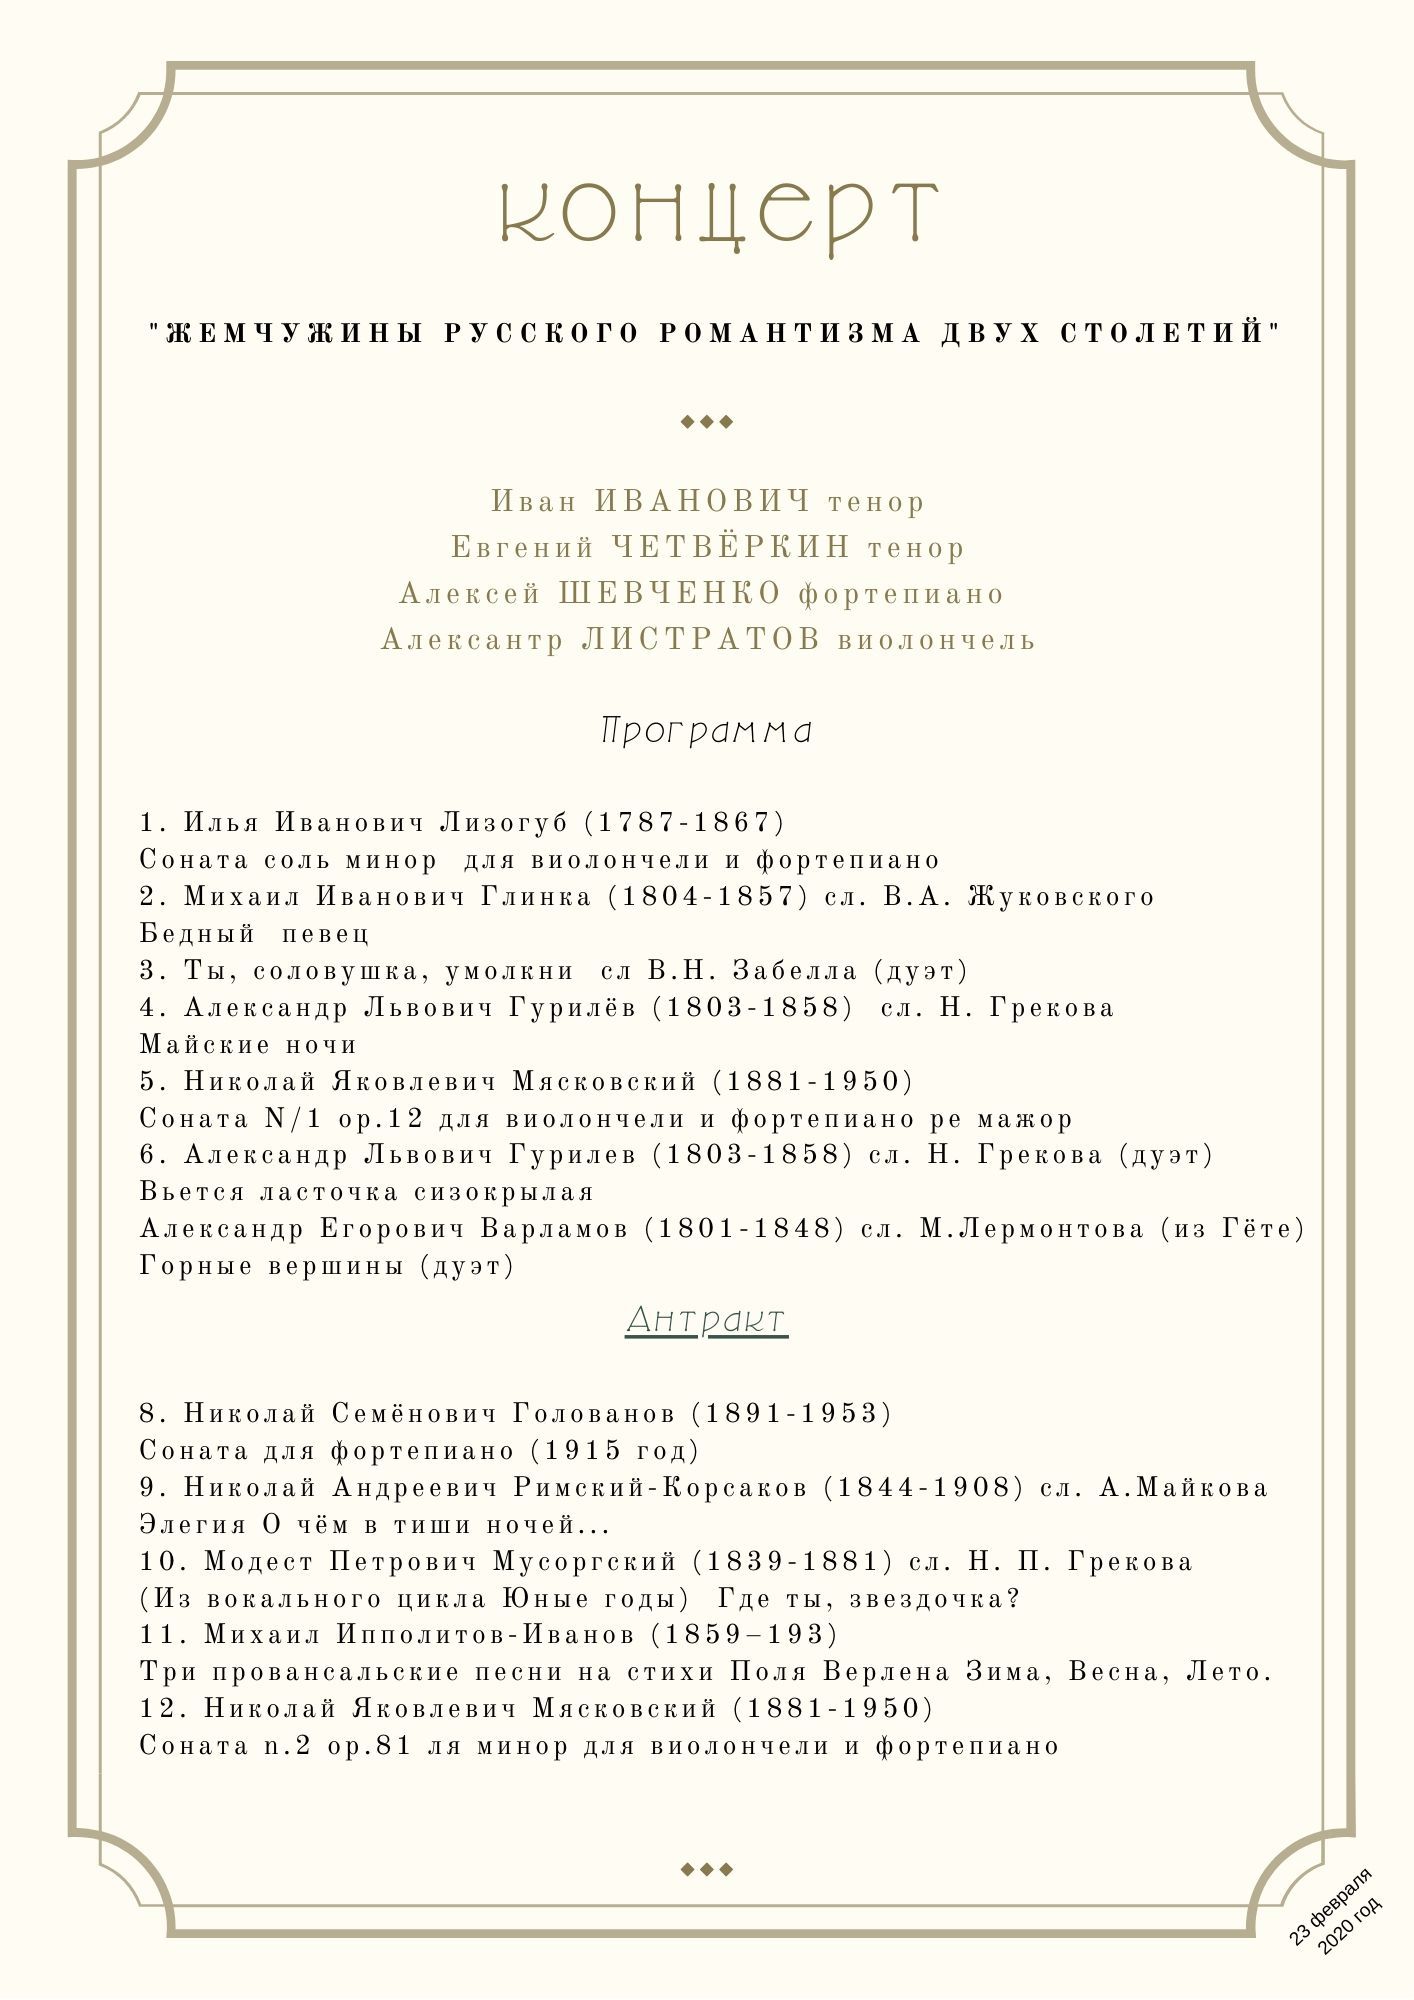 Доклад по теме Николай Семенович Голованов